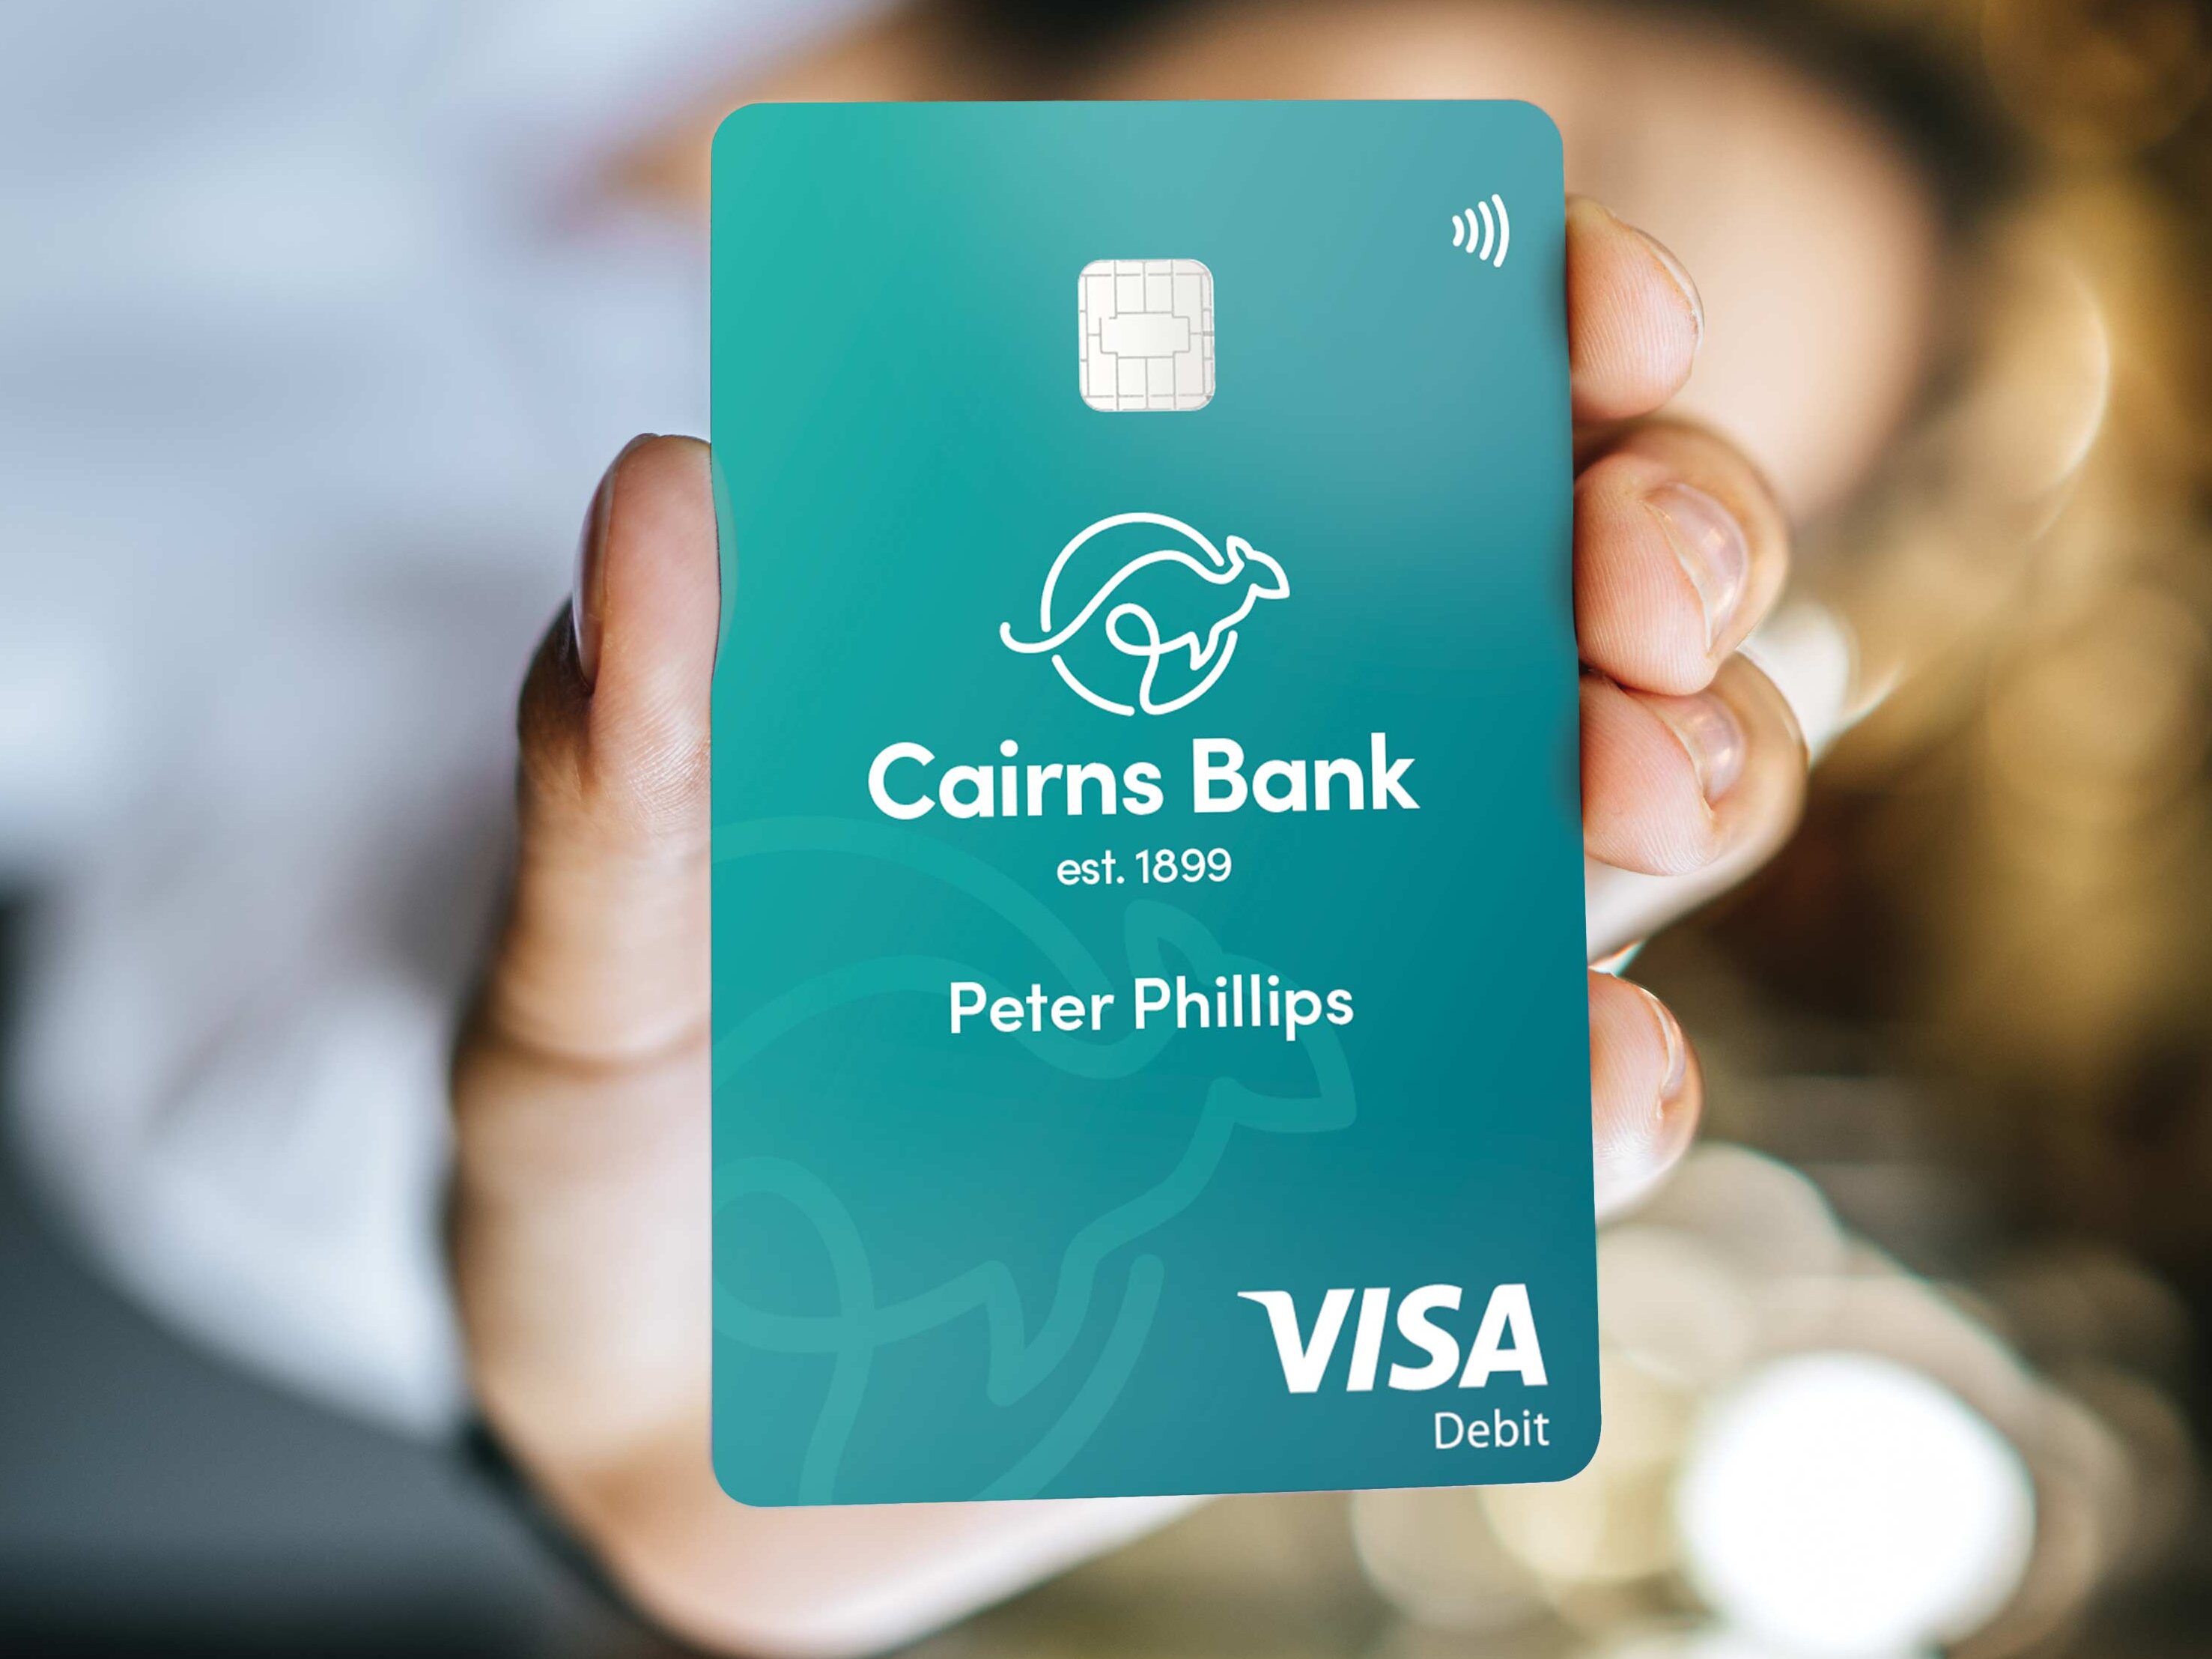 Cairns Bank VISA card design